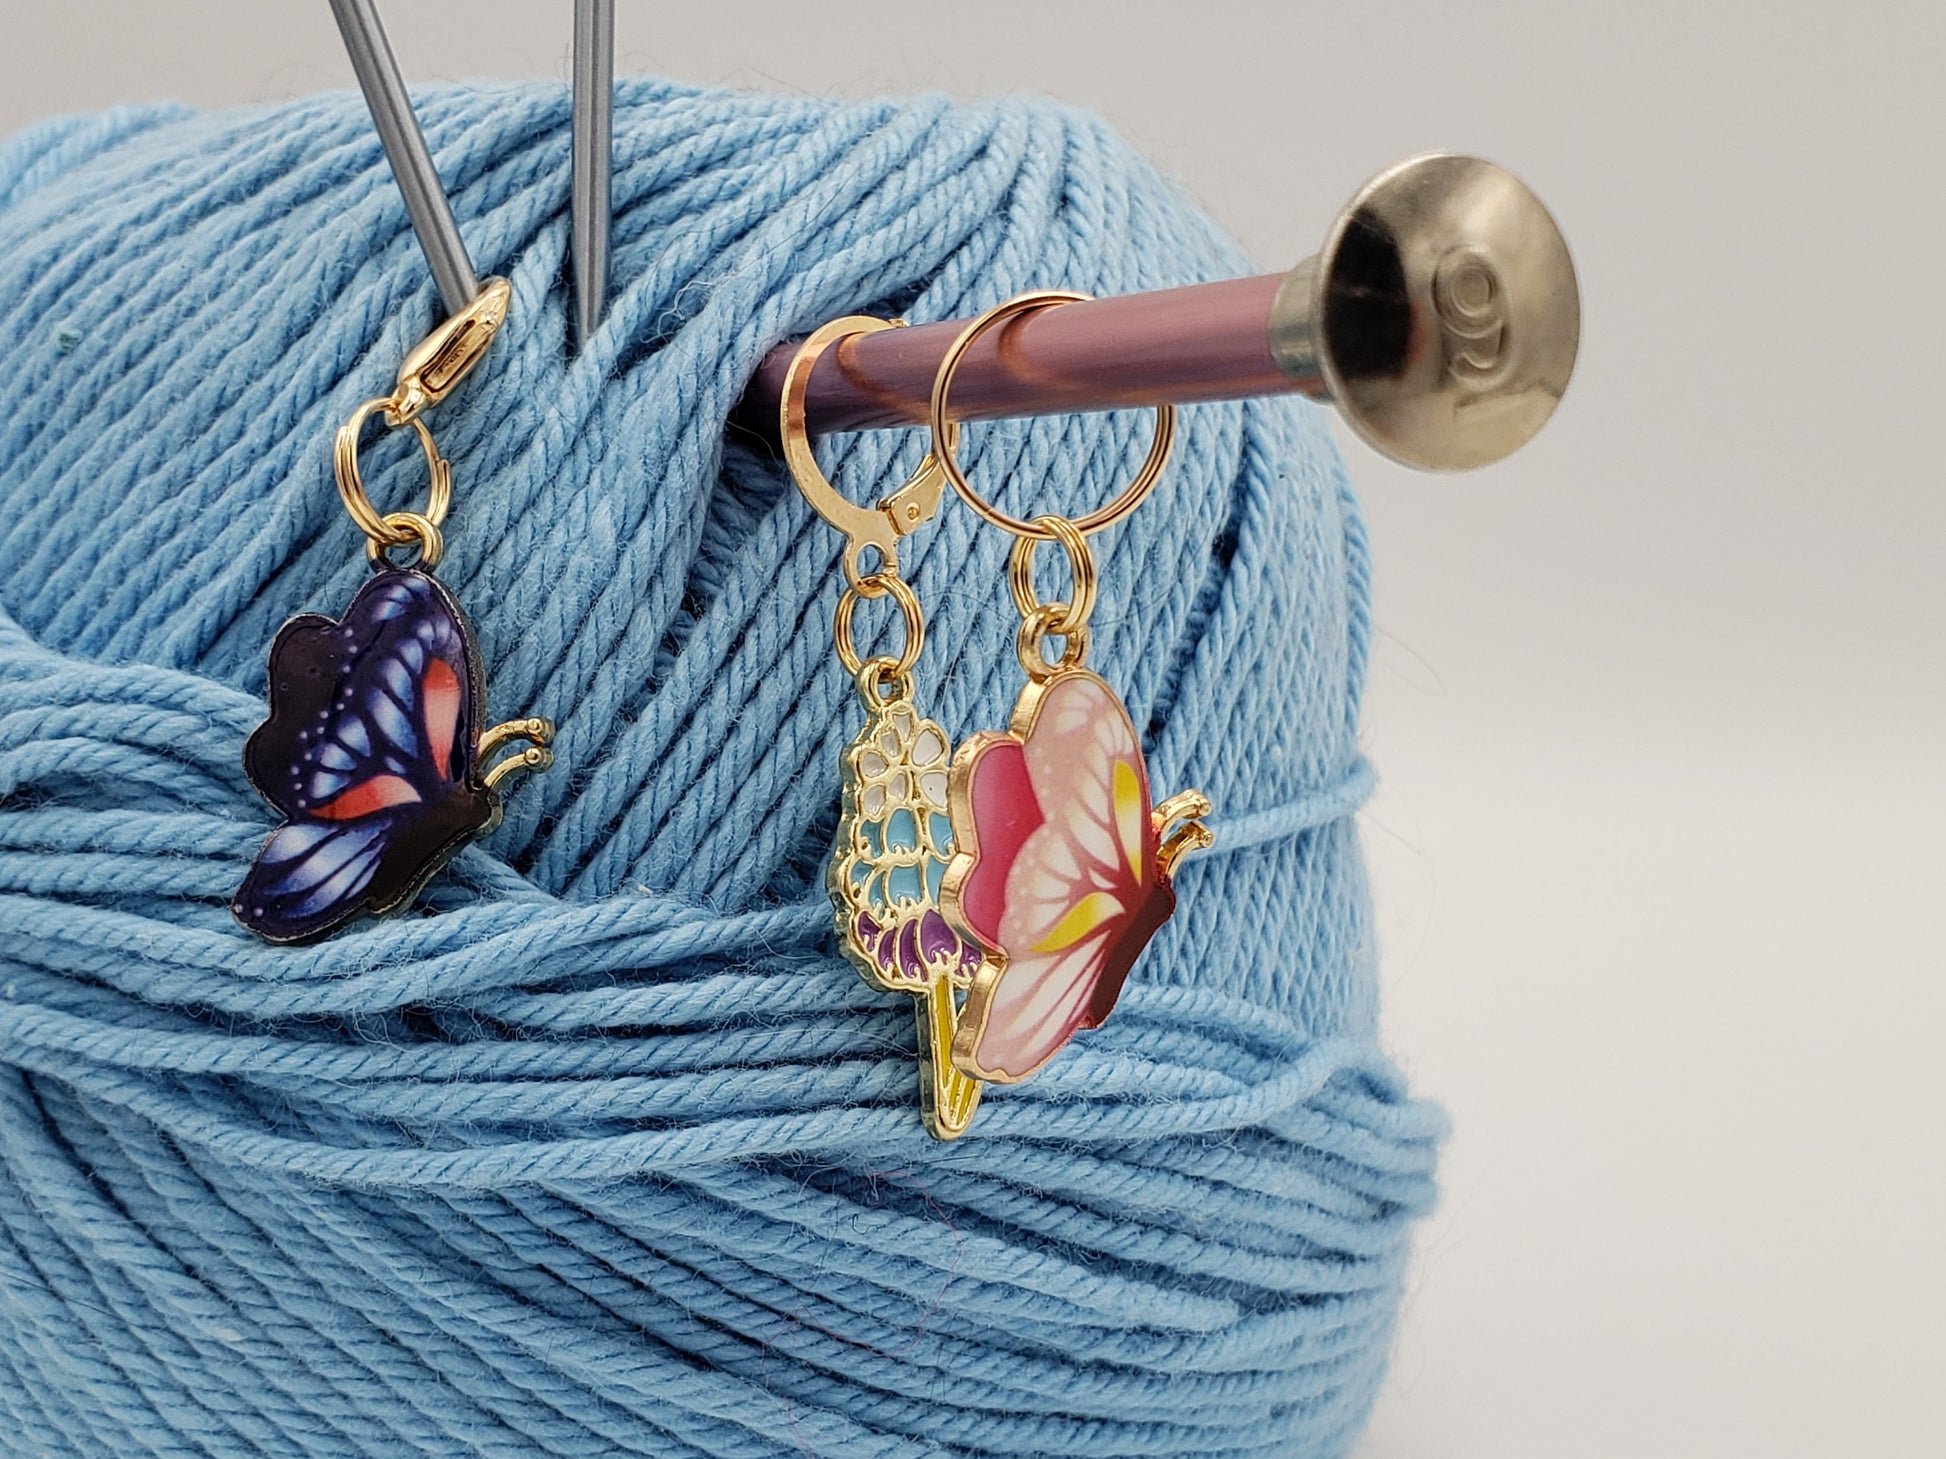 Butterfly Stitch Markers for Knitting, 3pc, butterflies and hyacinth flower | Crochet stitch marker, progress keeper, crochet accessories